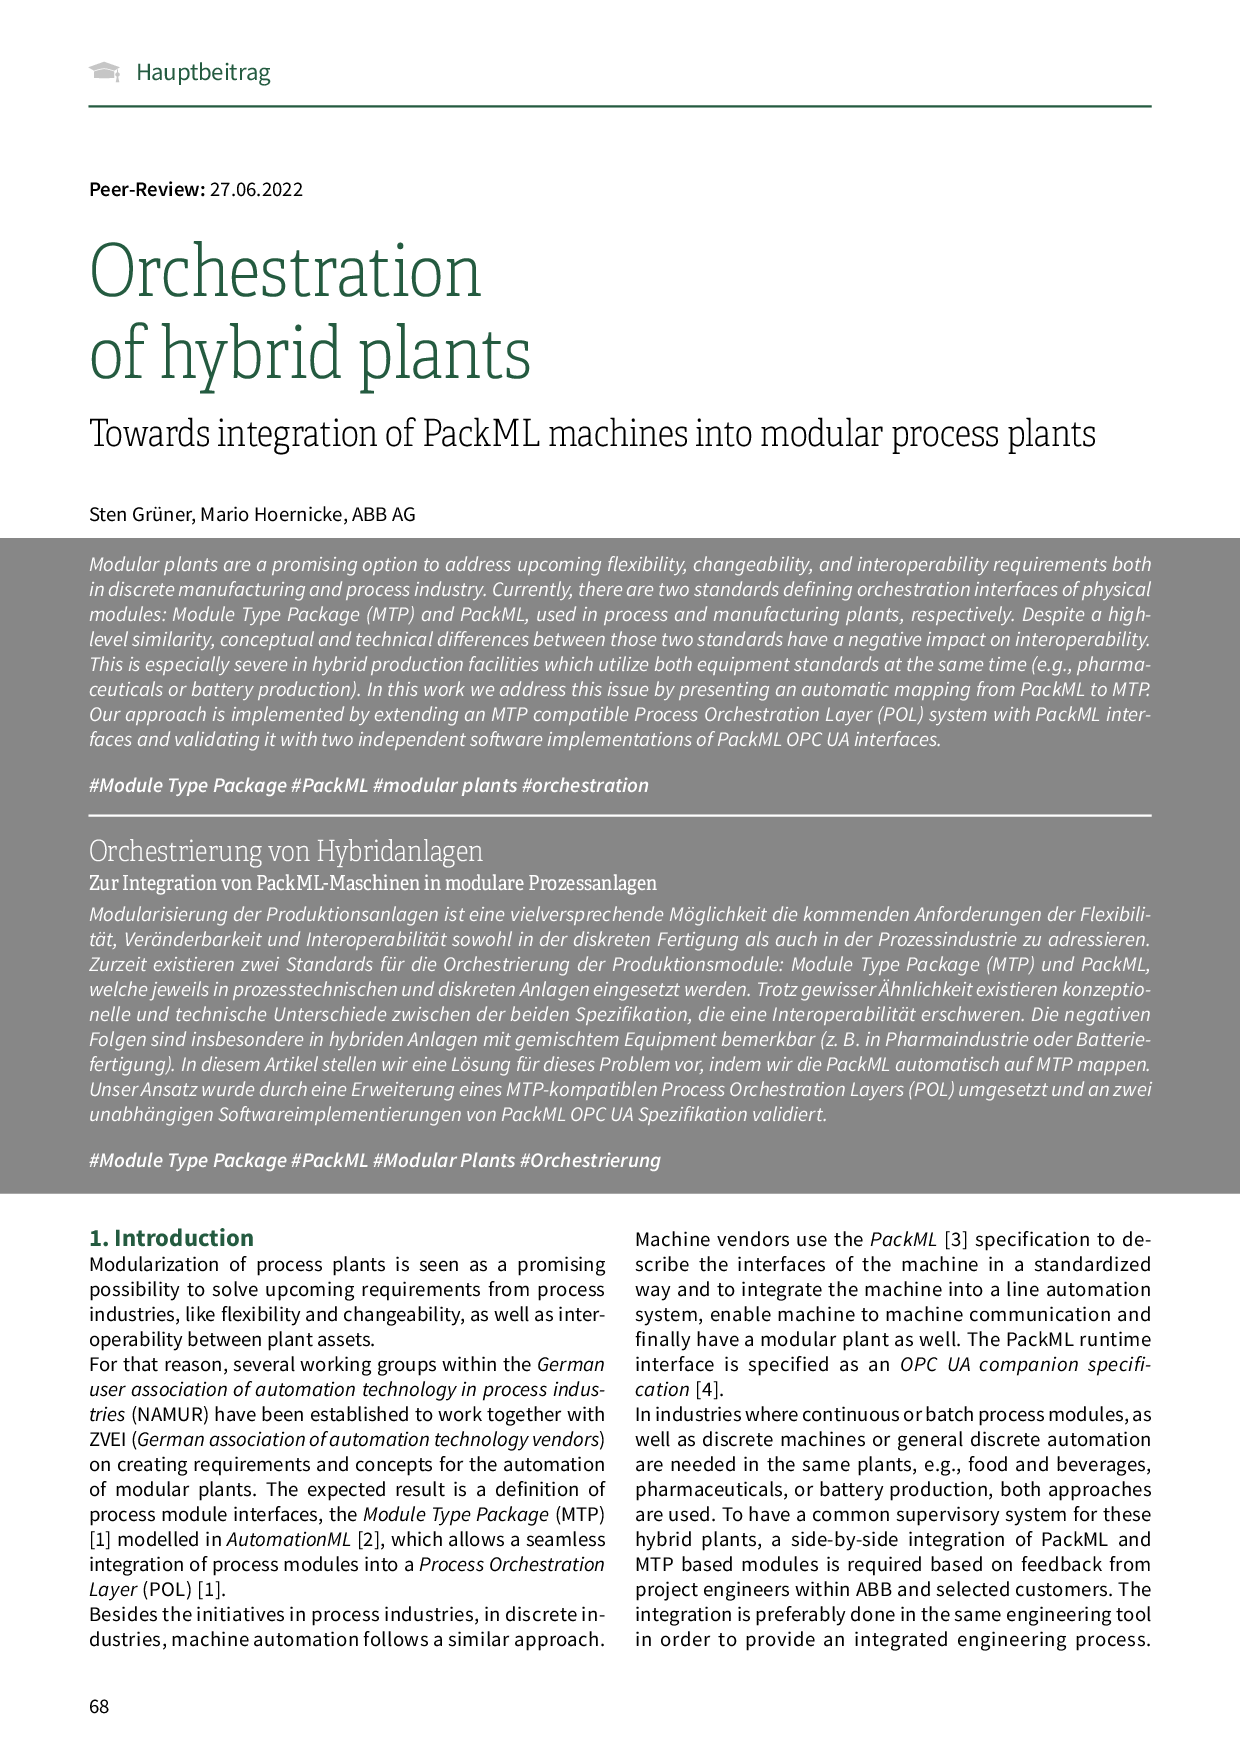 Orchestration of hybrid plants